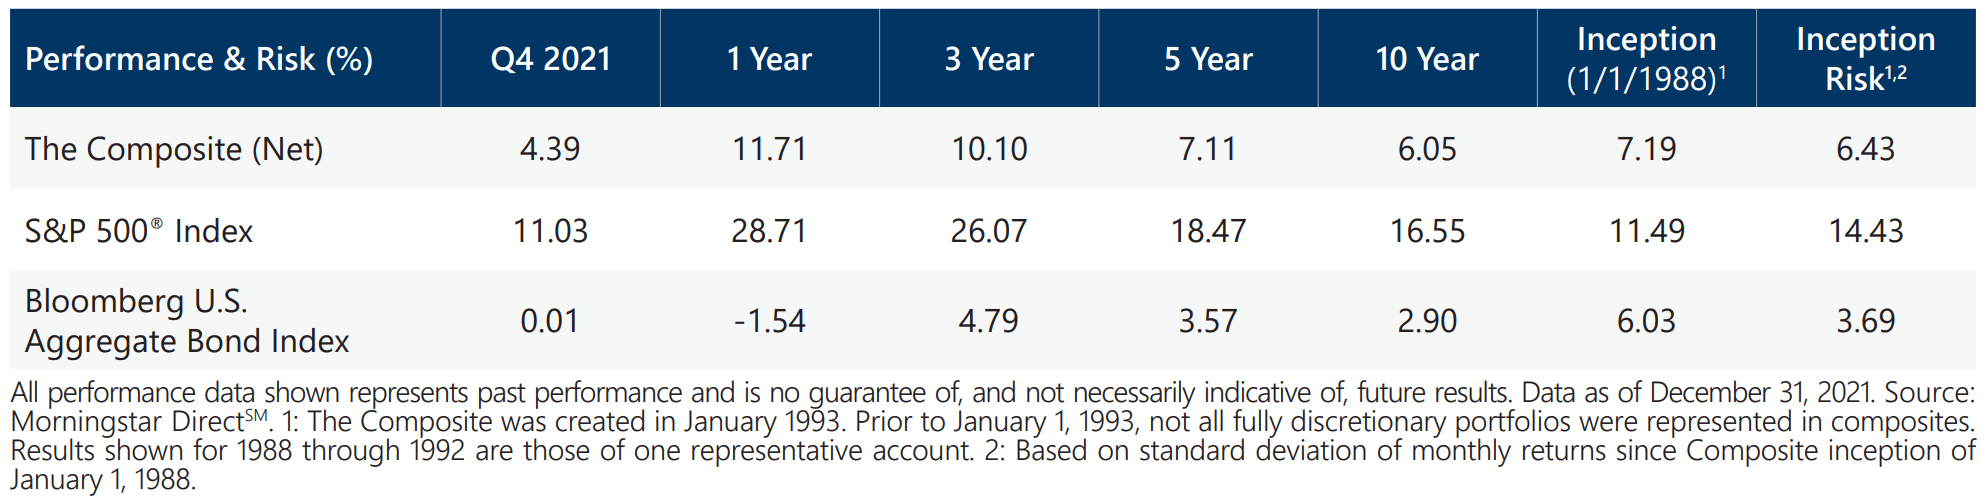 Index/RA Performance Summary - Q4 2021